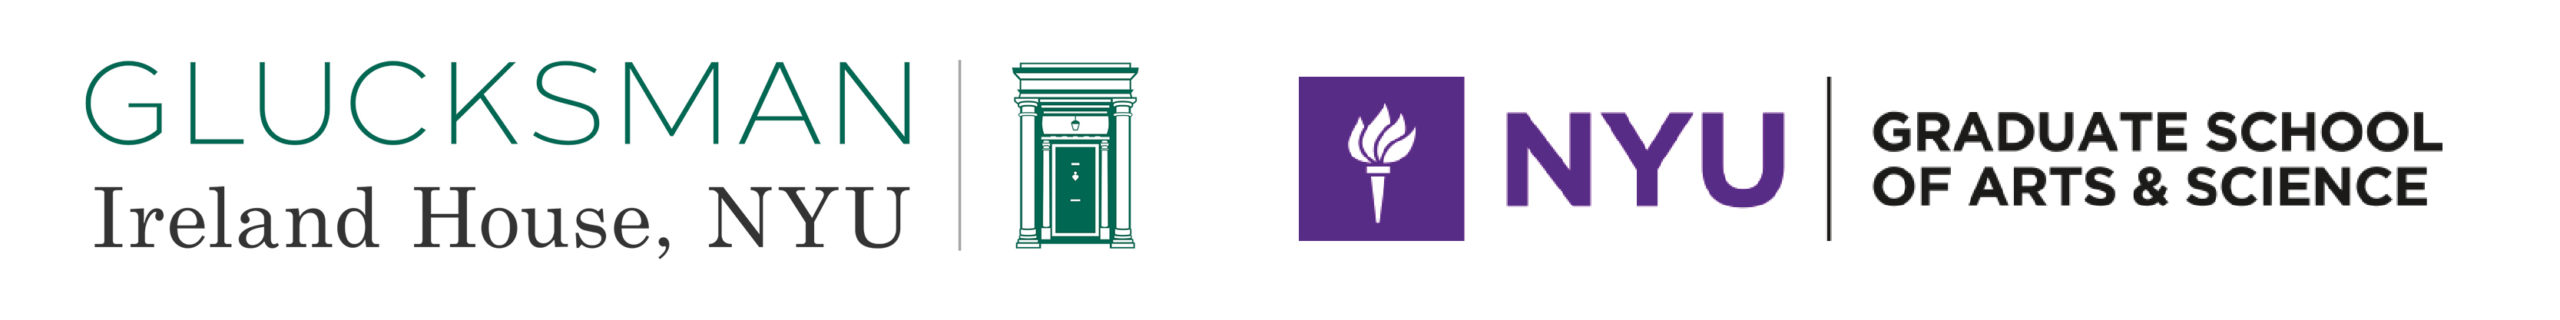 Logos: Glucksman Ireland House NYU & NYU Graduate School of Arts & Science